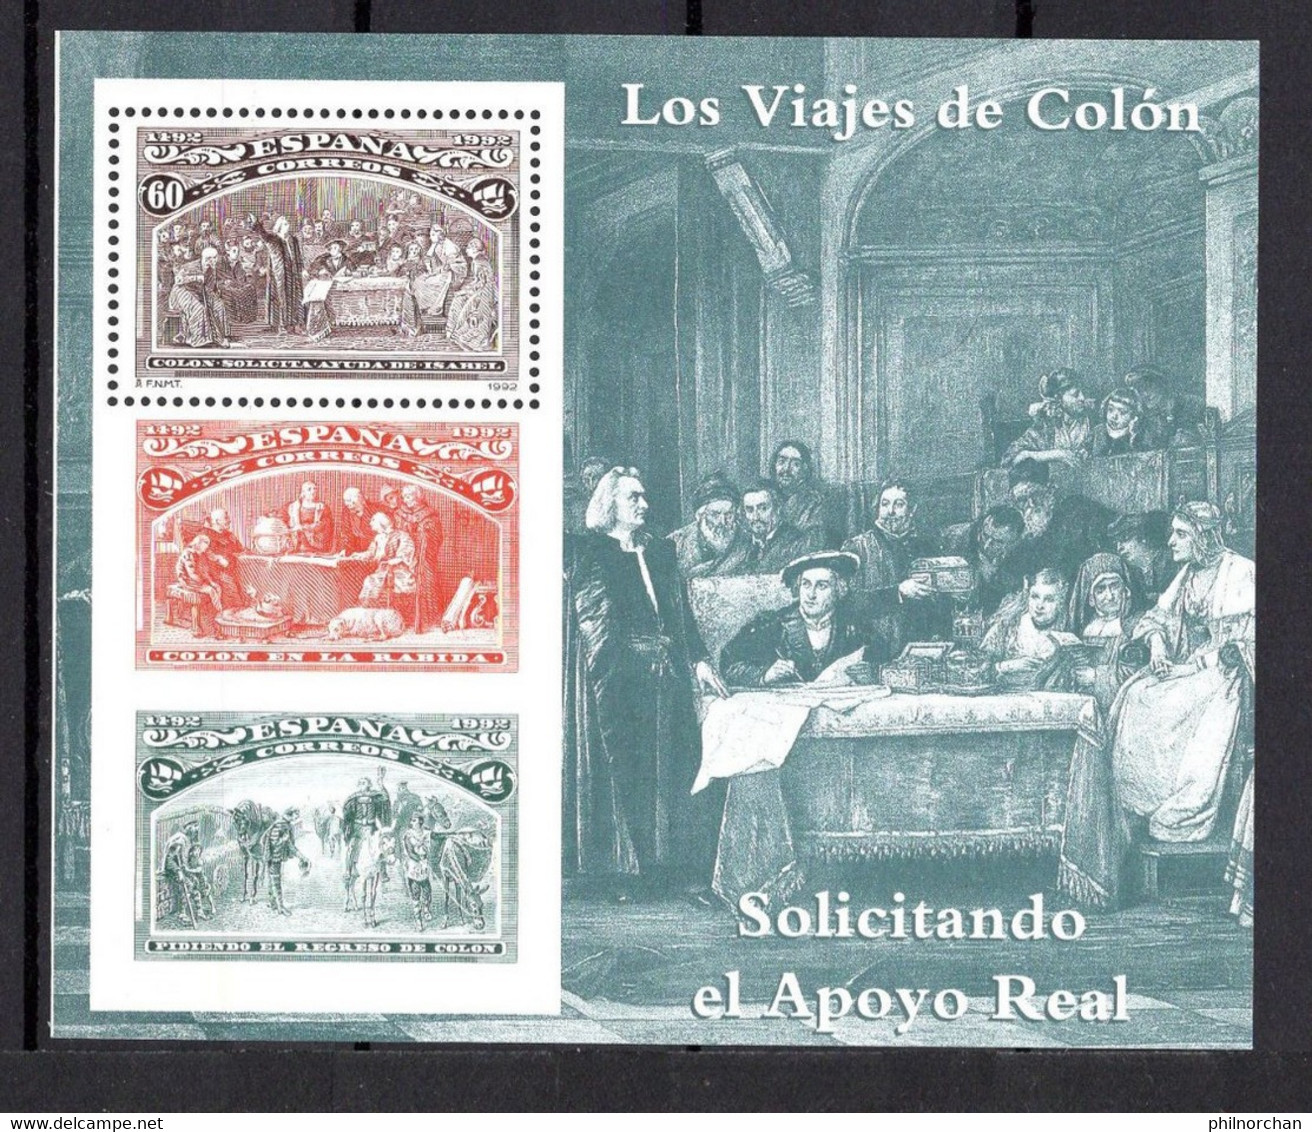 Espagne 1992 Blocs Neufs** N°49,51,52,53,54,55,56, Bloc du timbre 2818  TB  3 €  (cote 16,65 €)